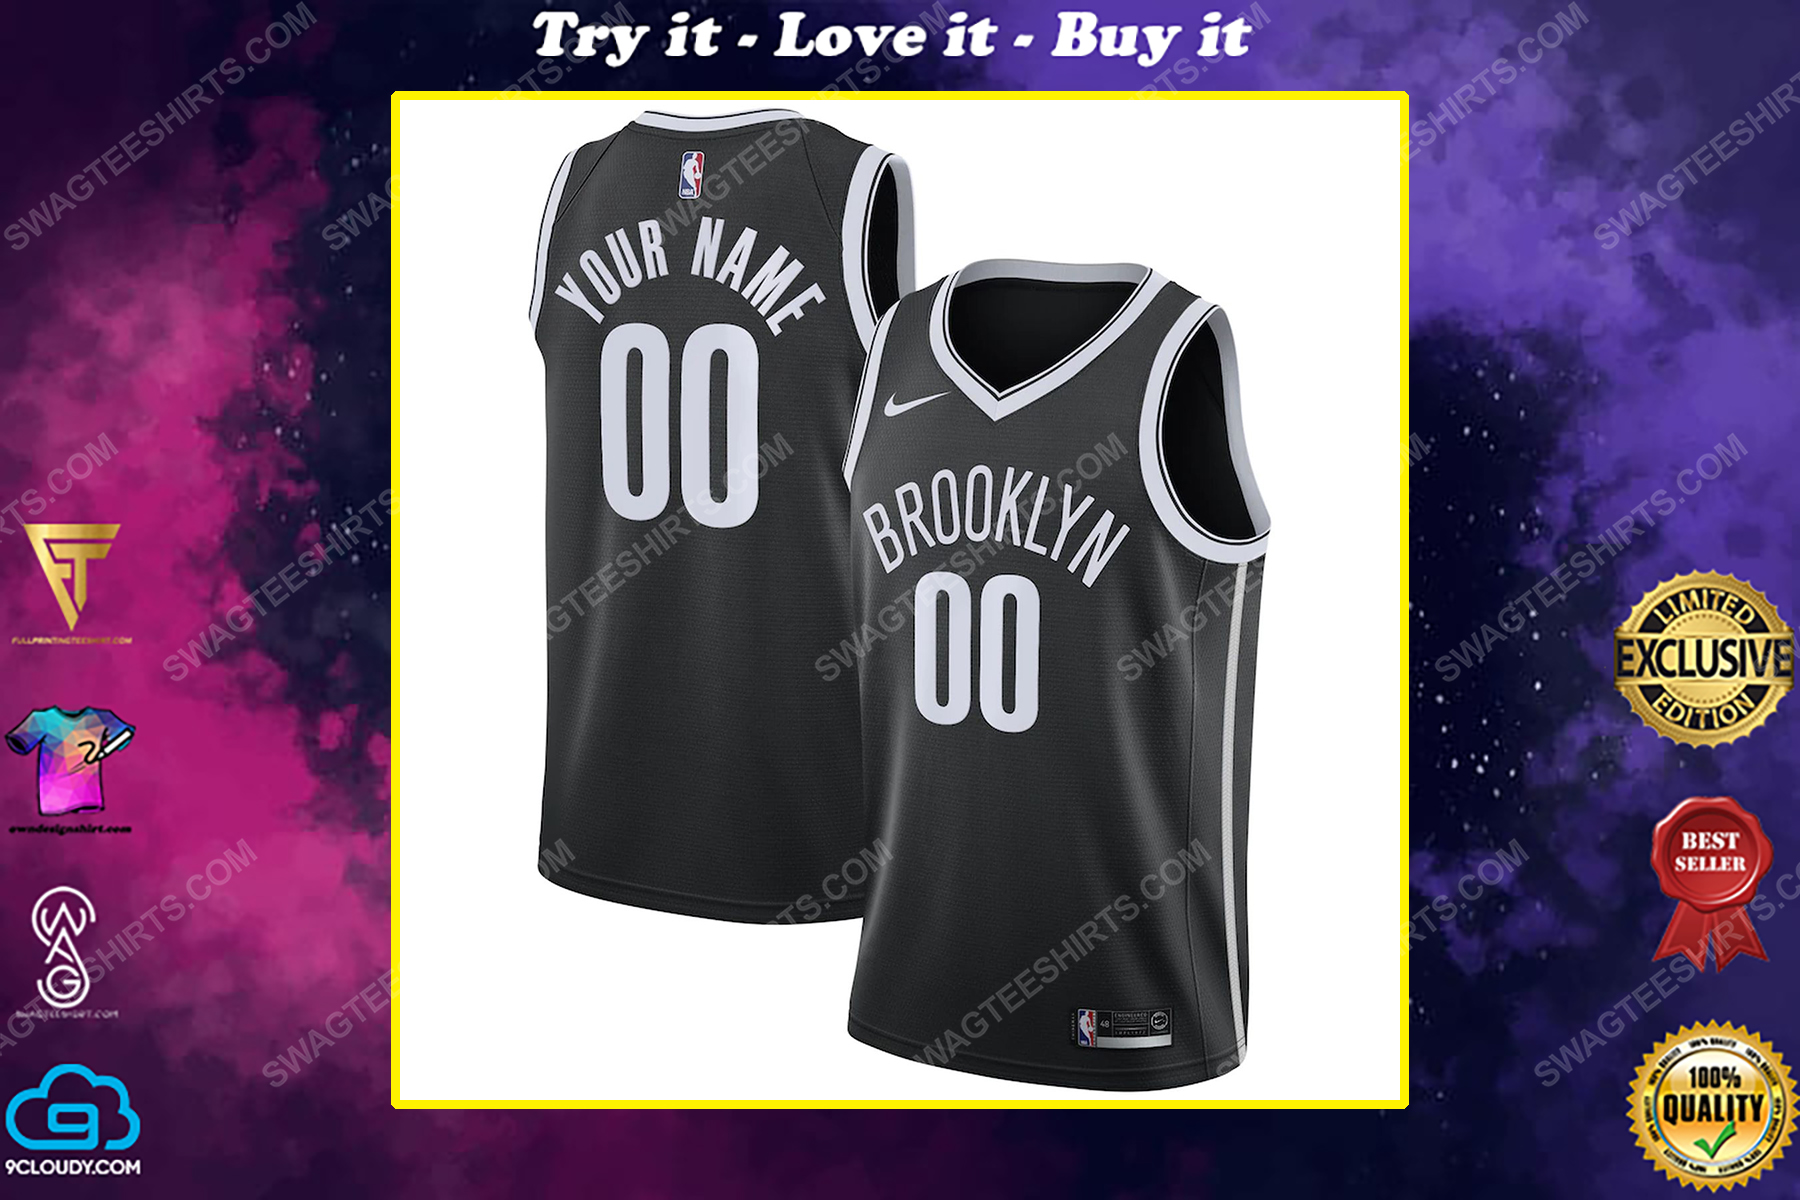 NBA Basketball Wifey Nets Jersey - Black